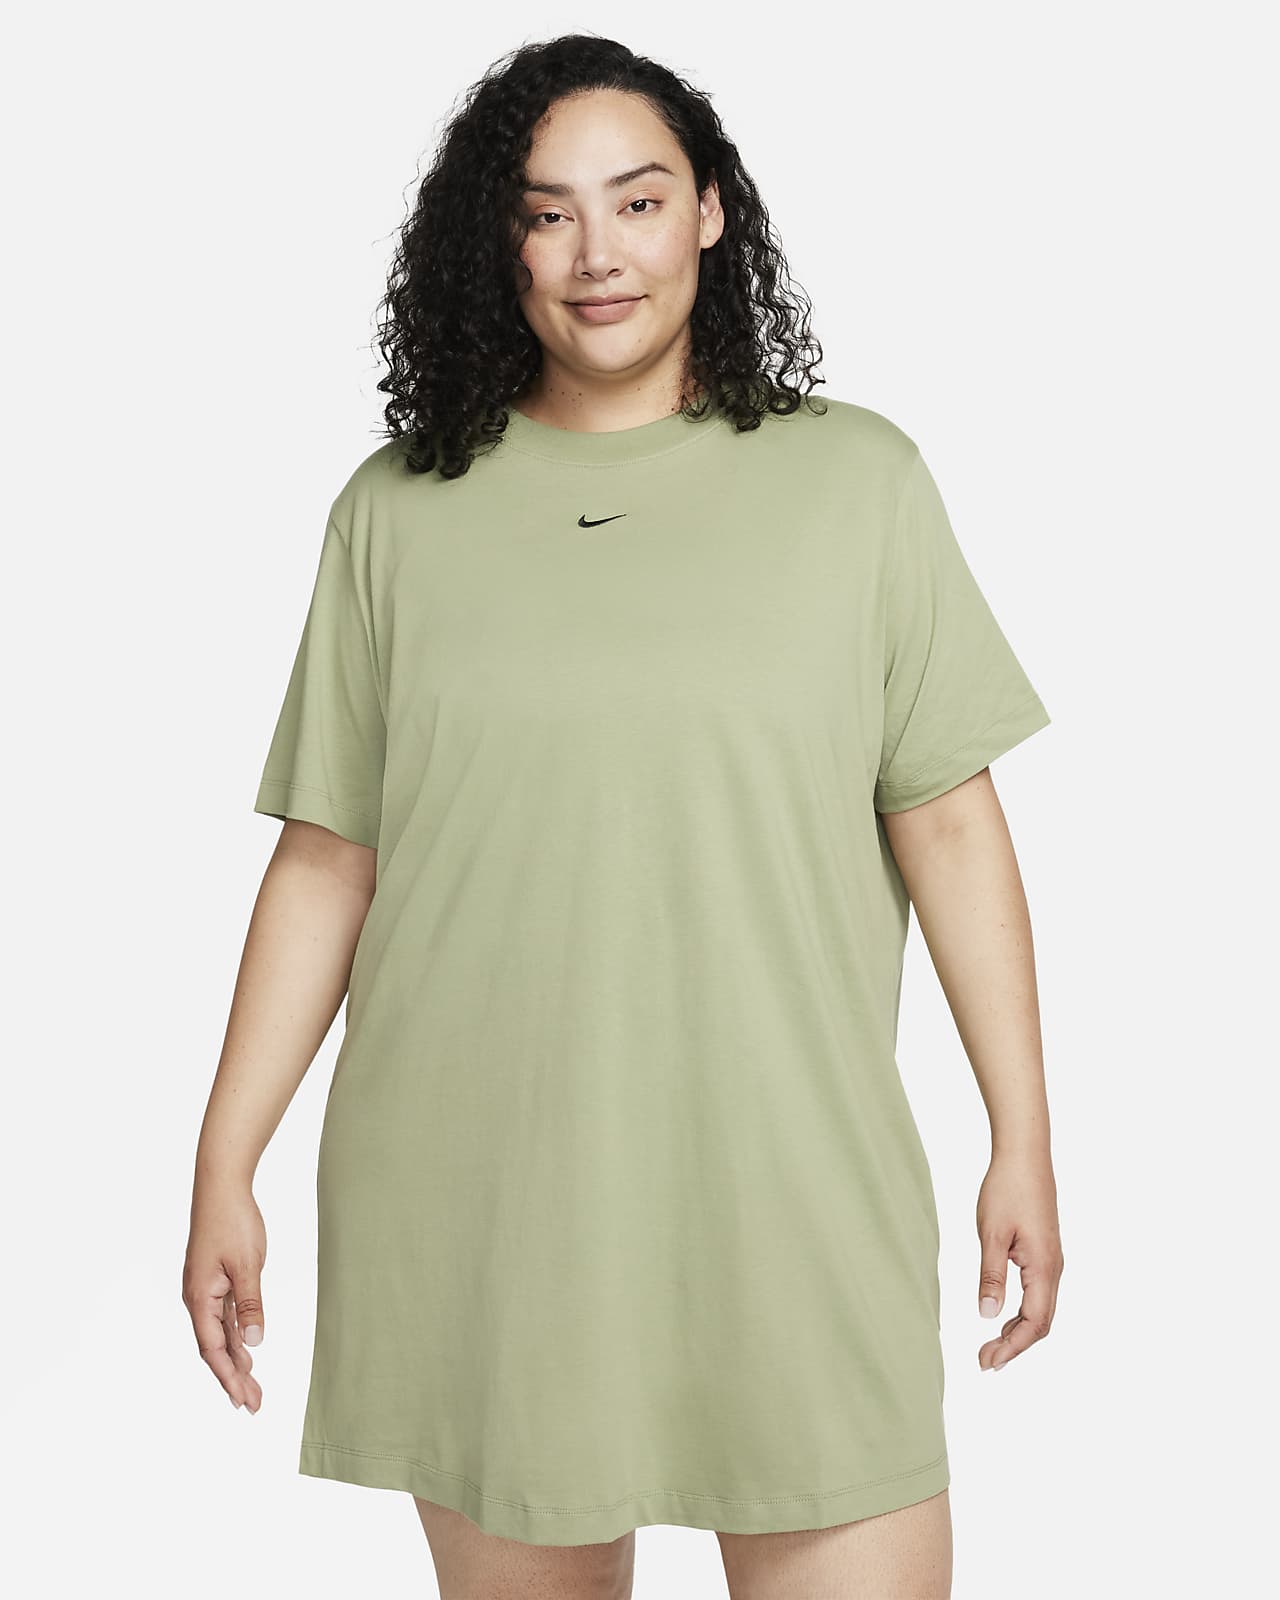 Sportswear Short-Sleeve T-Shirt Dress (Plus Size). Nike.com